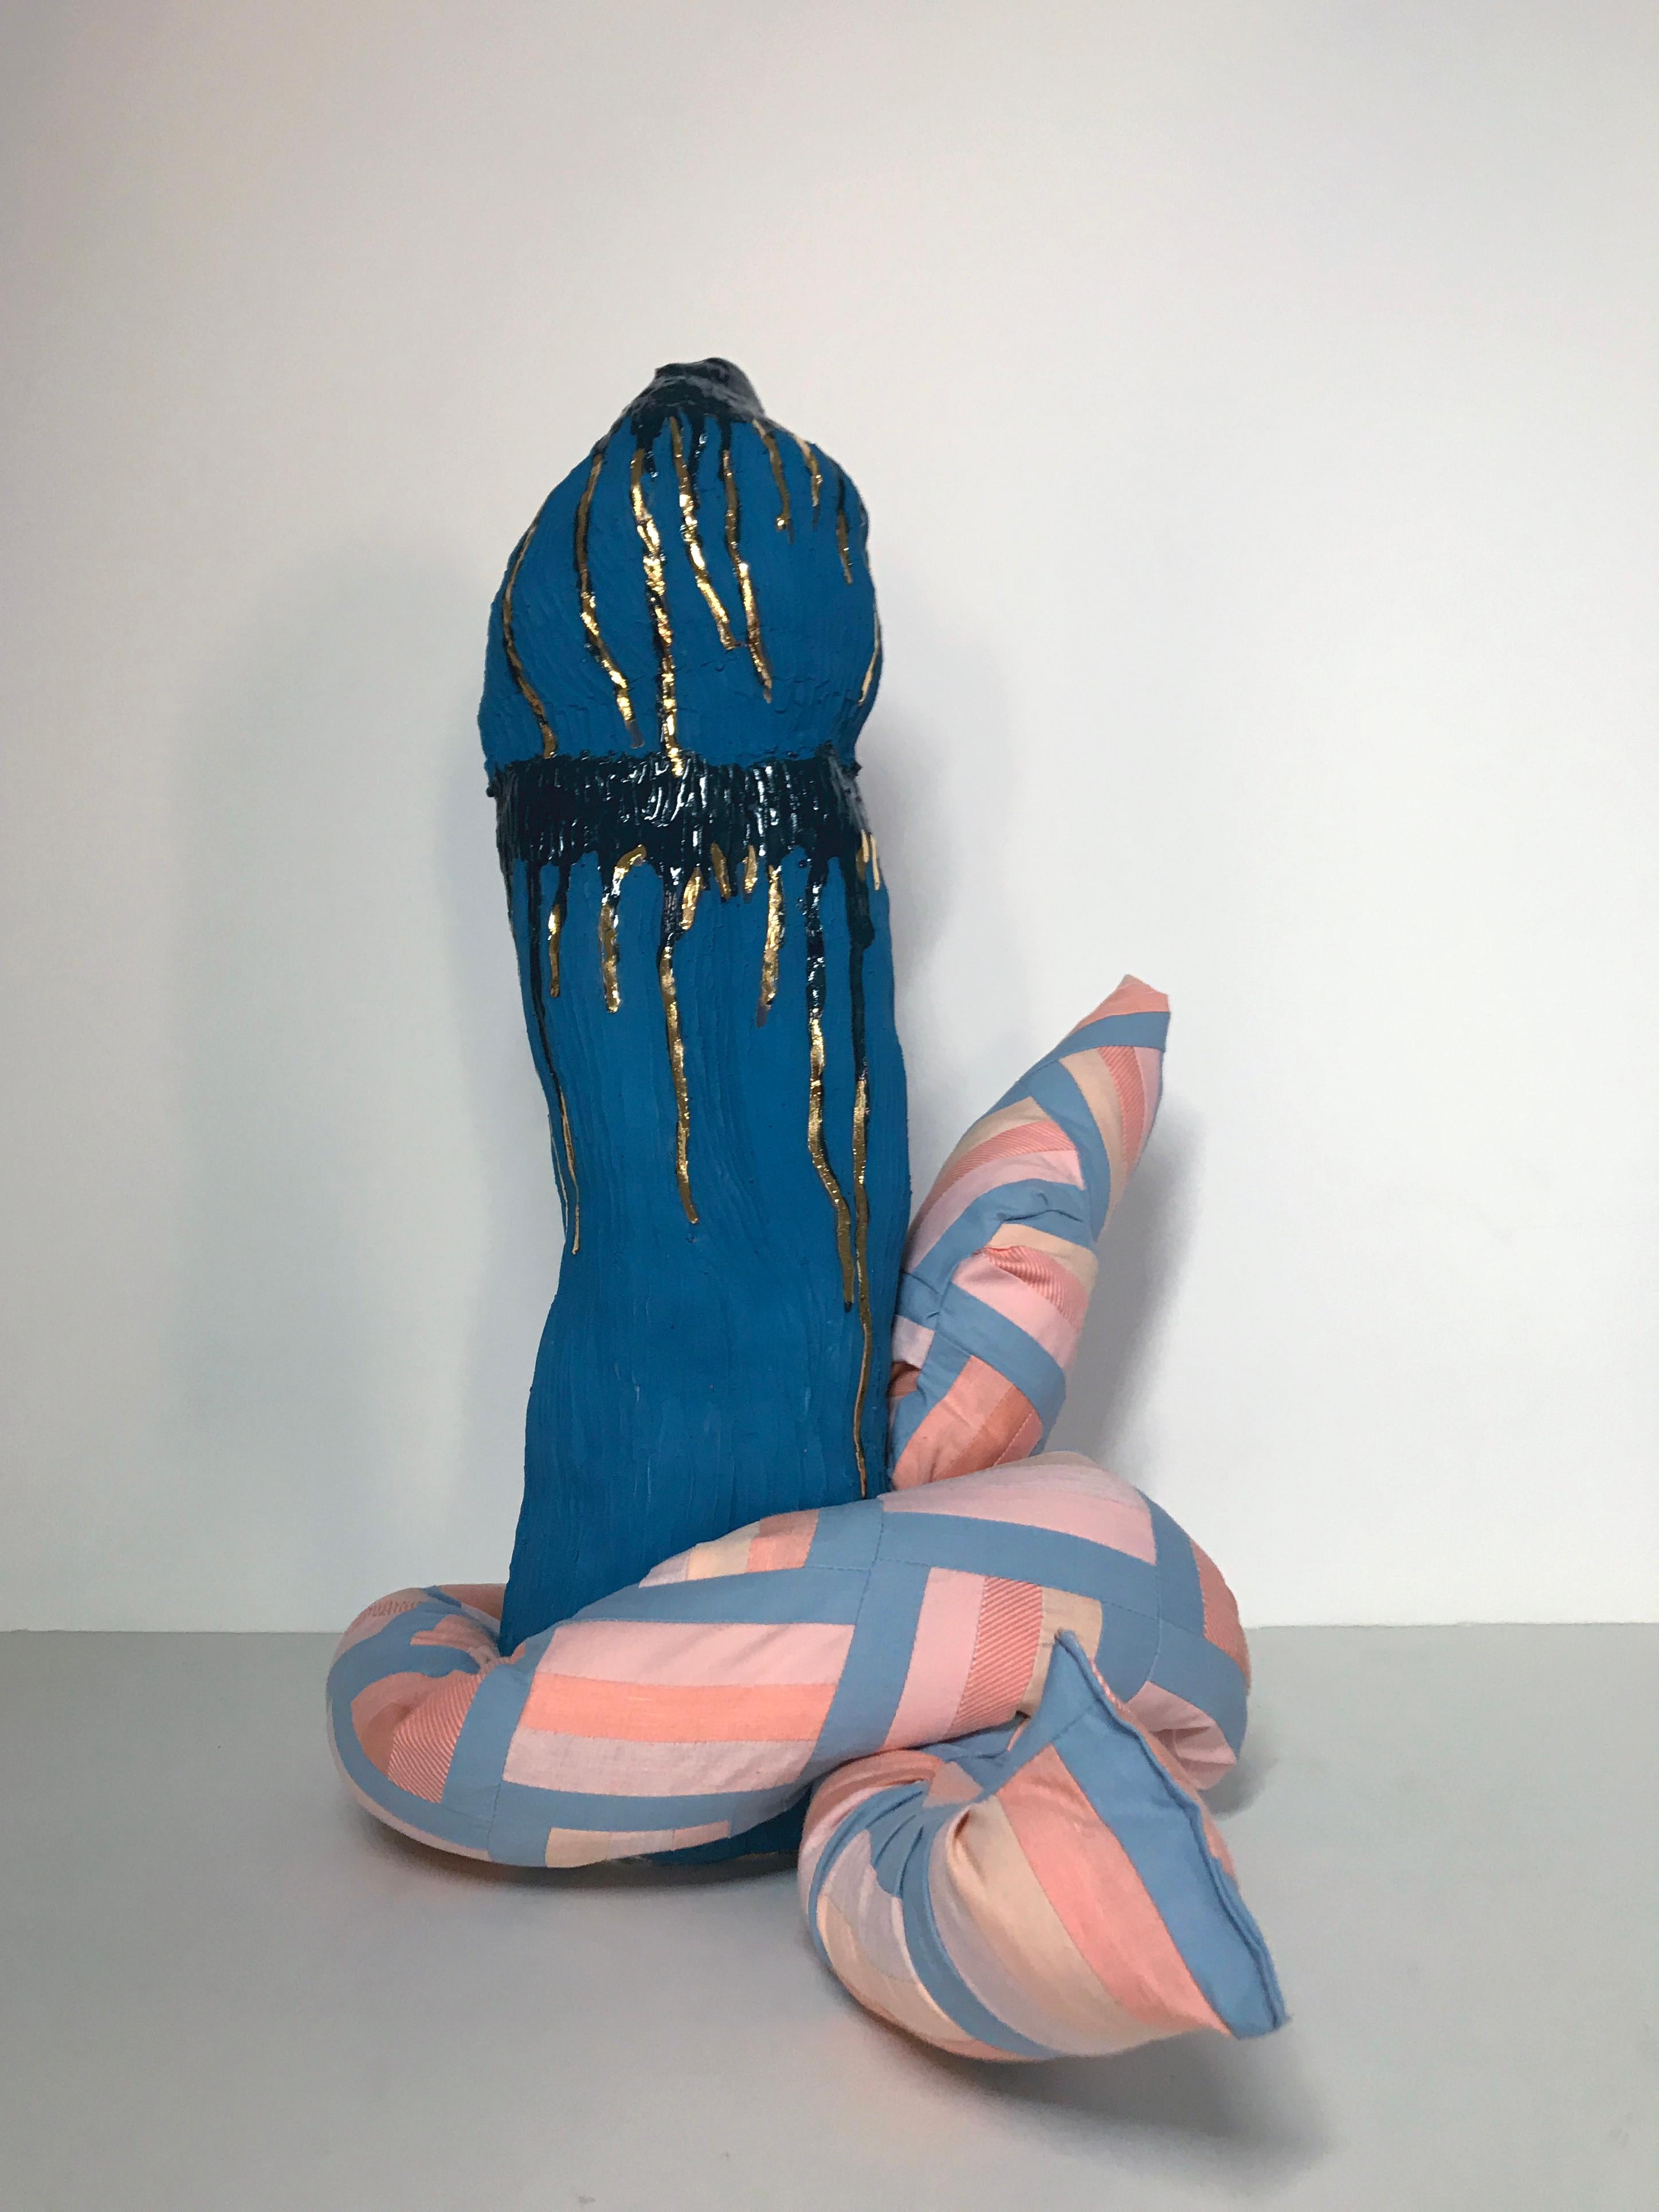 Ceramic and textile sculpture: 'No 2' - Sculpture by Ak Jansen